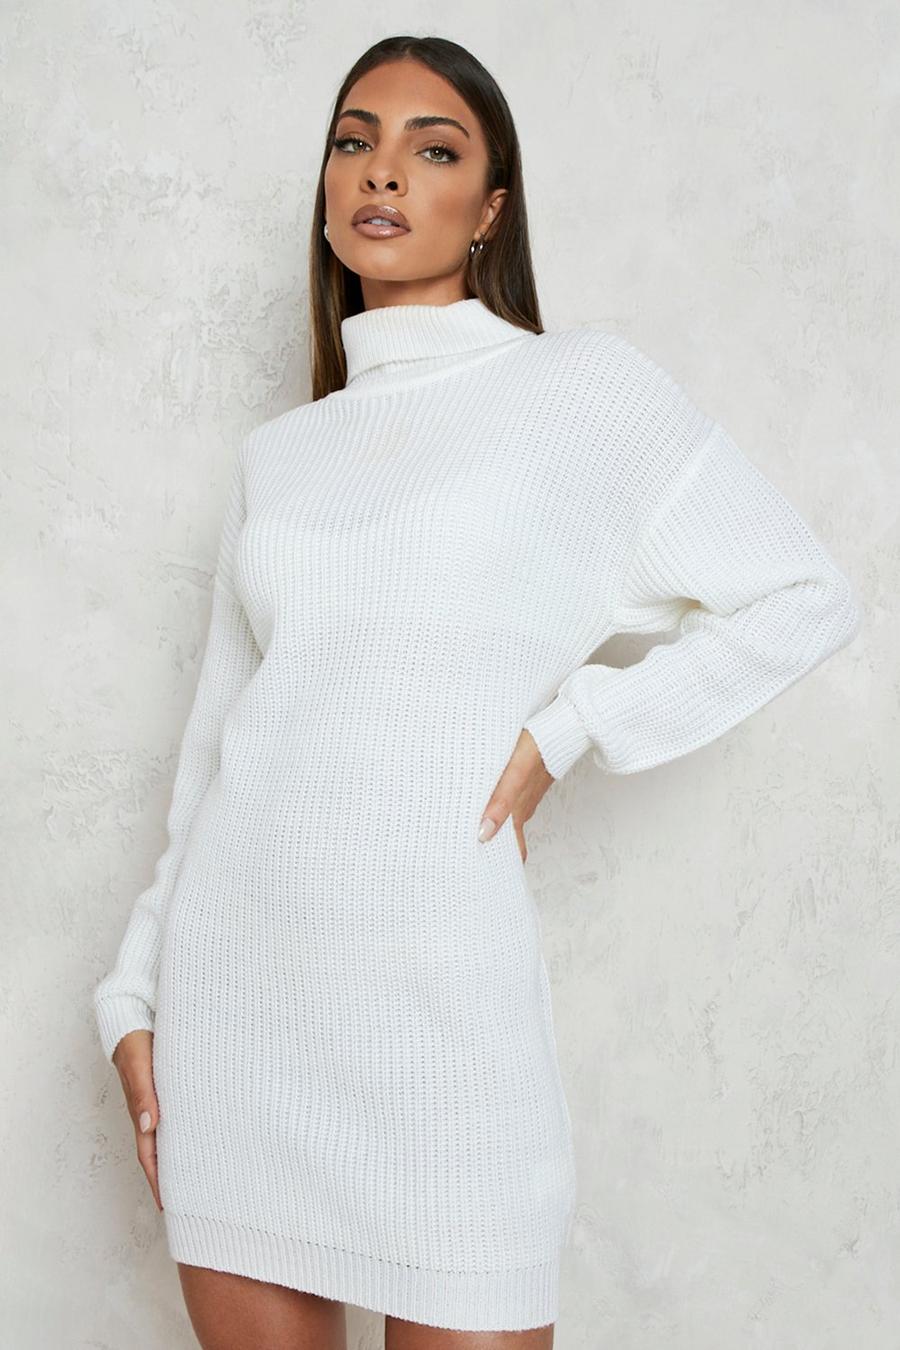 White Turtleneck Sweater Dress Clearance | bellvalefarms.com